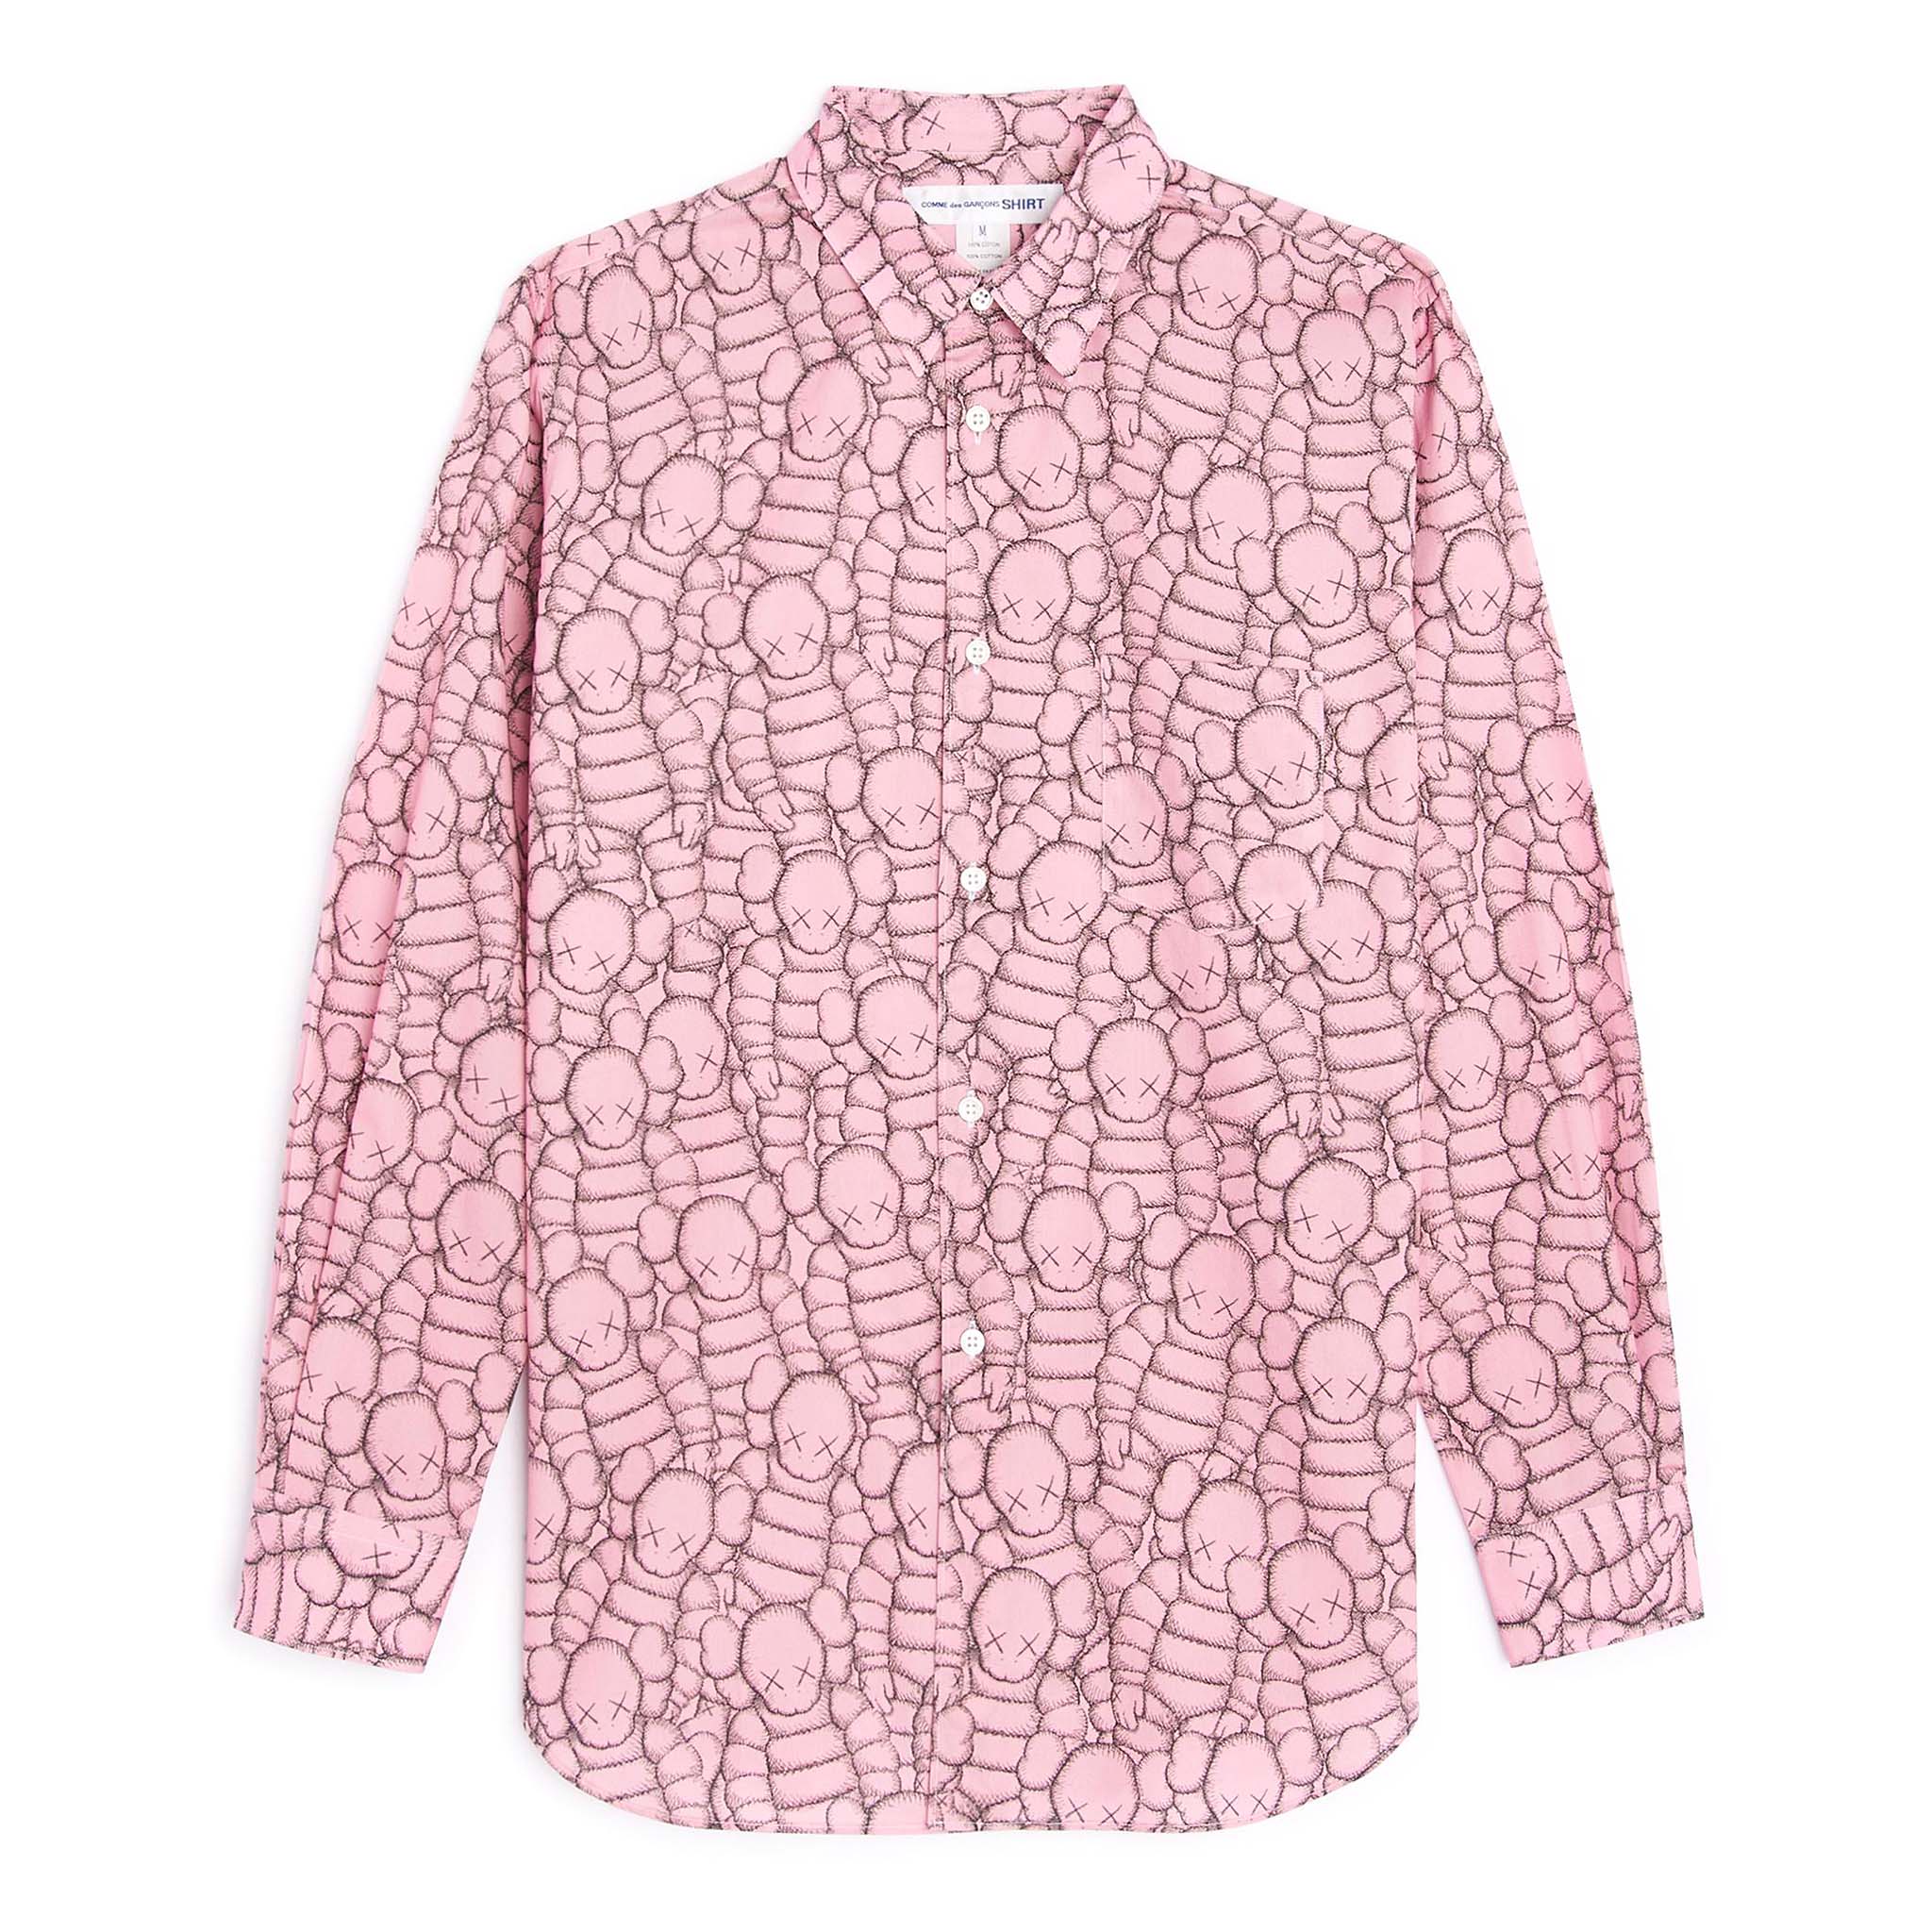 CDG x KAWS FH-B023 Chum Shirt Pink